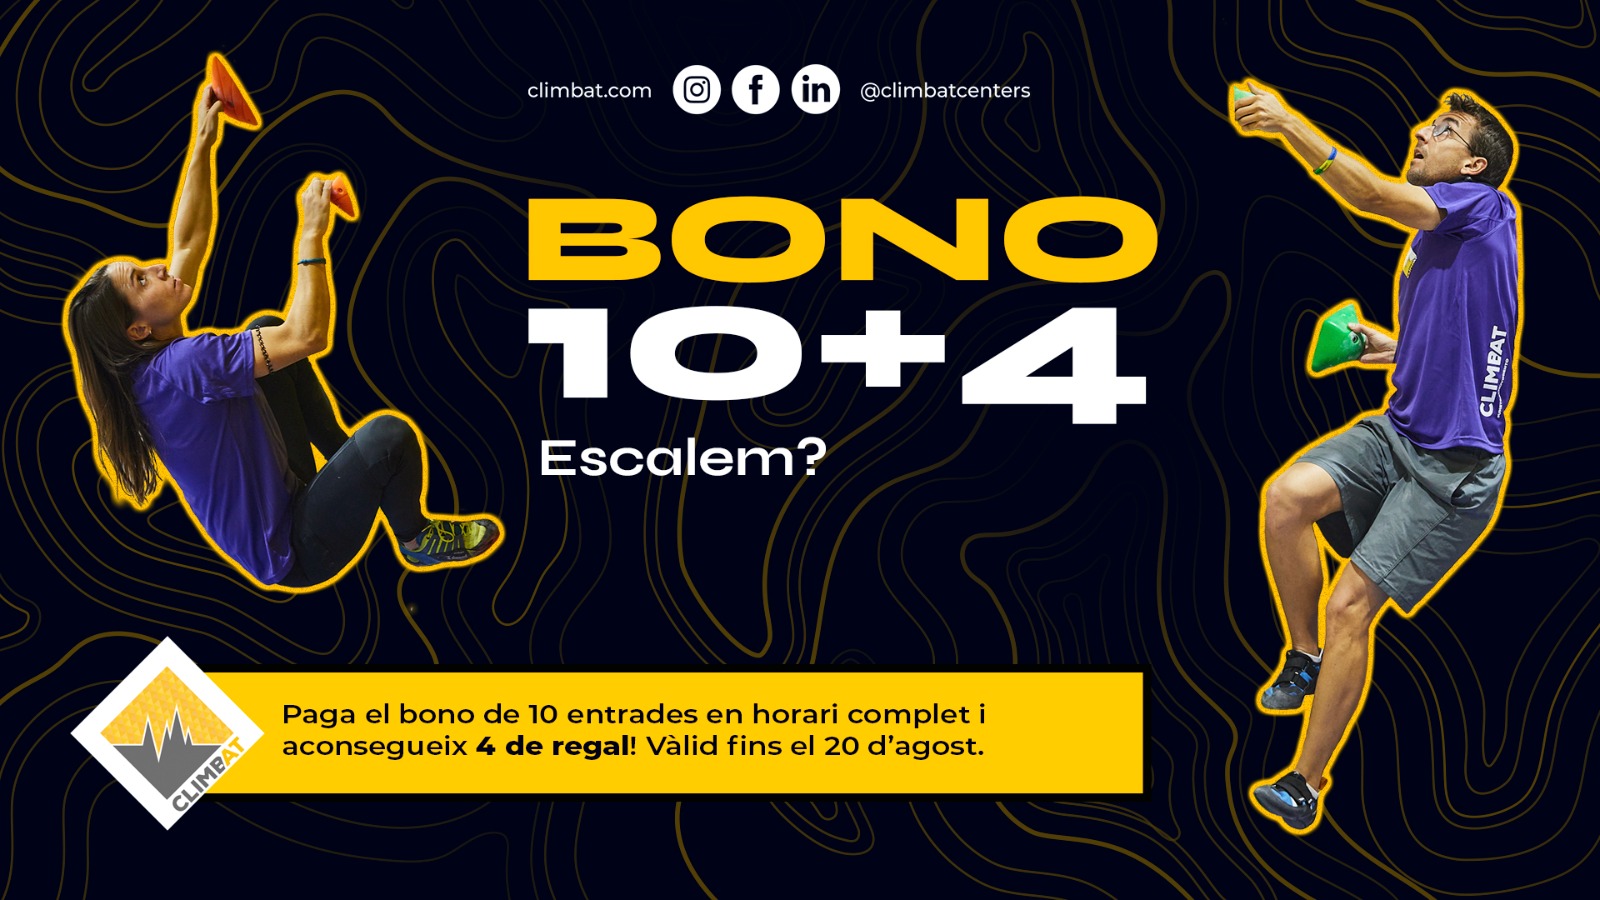 BONO 10+4